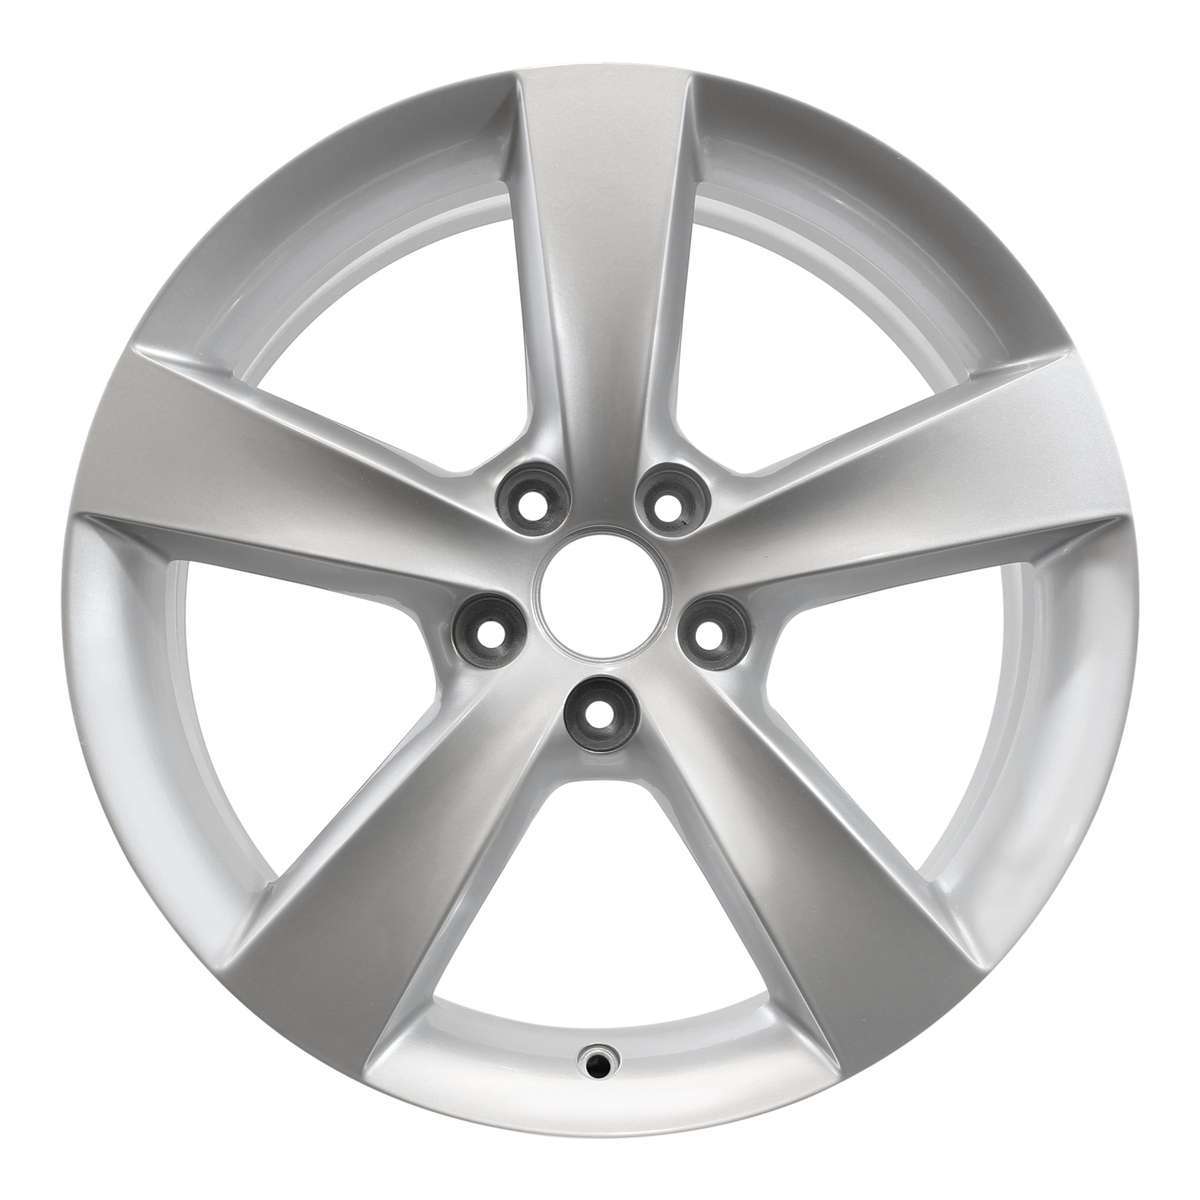 2015 Dodge Dart New 18" Replacement Wheel Rim RW2479S